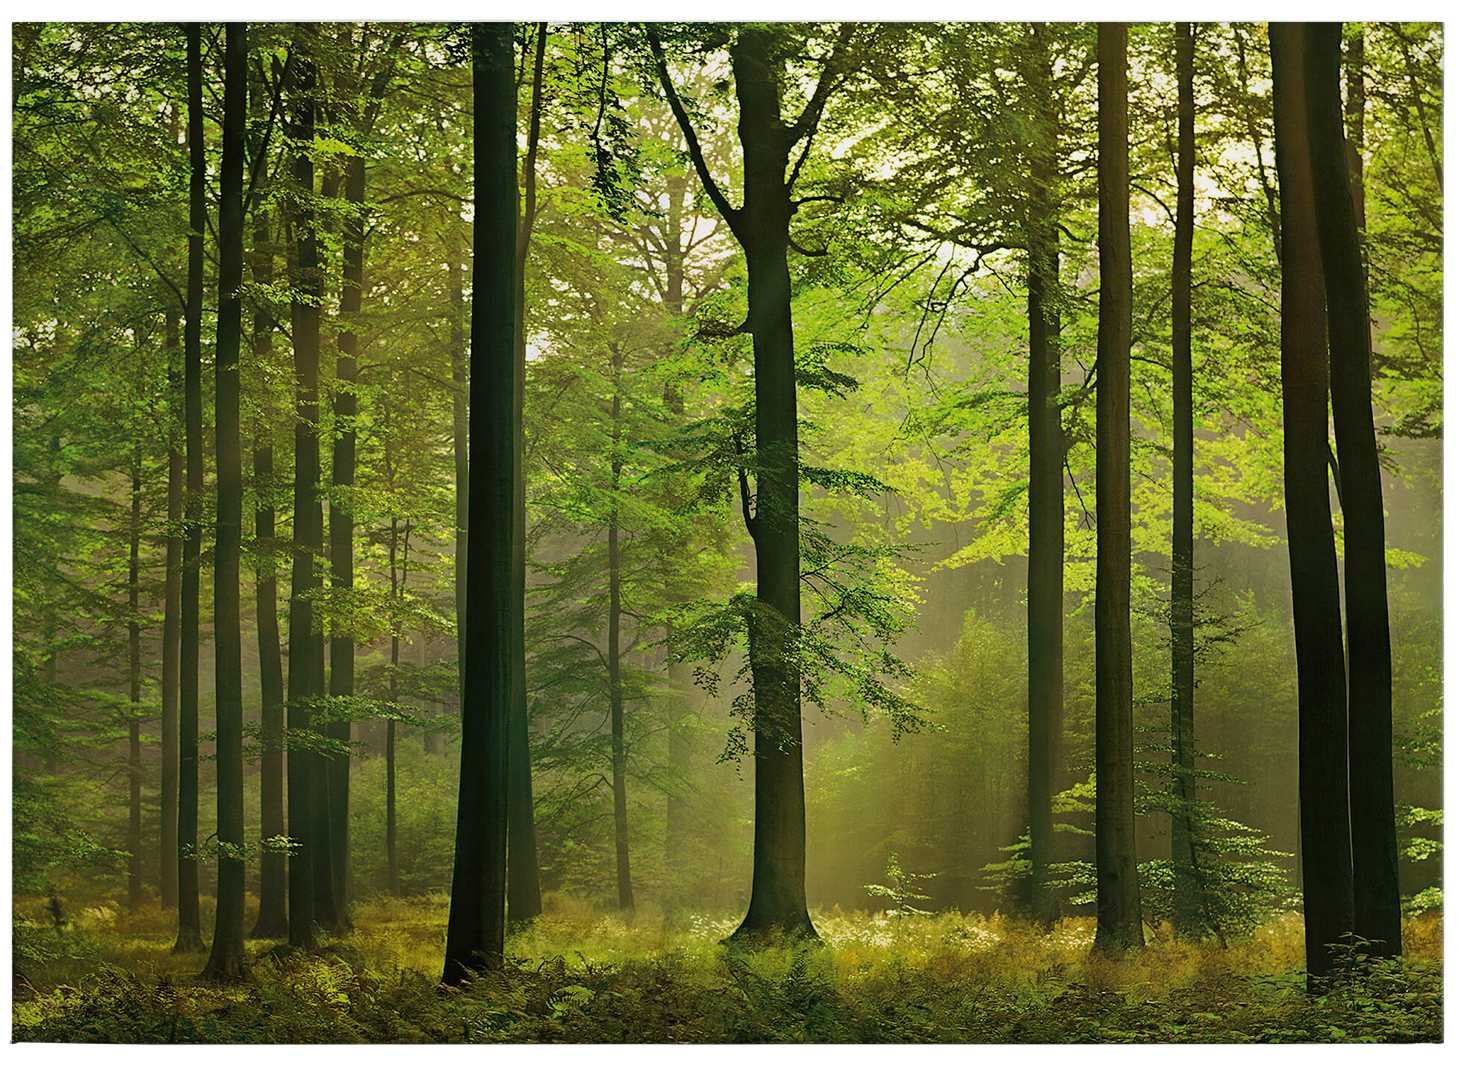             Leinwandbild Wald-Motiv Herbstblättern – 0,70 m x 0,50 m
        